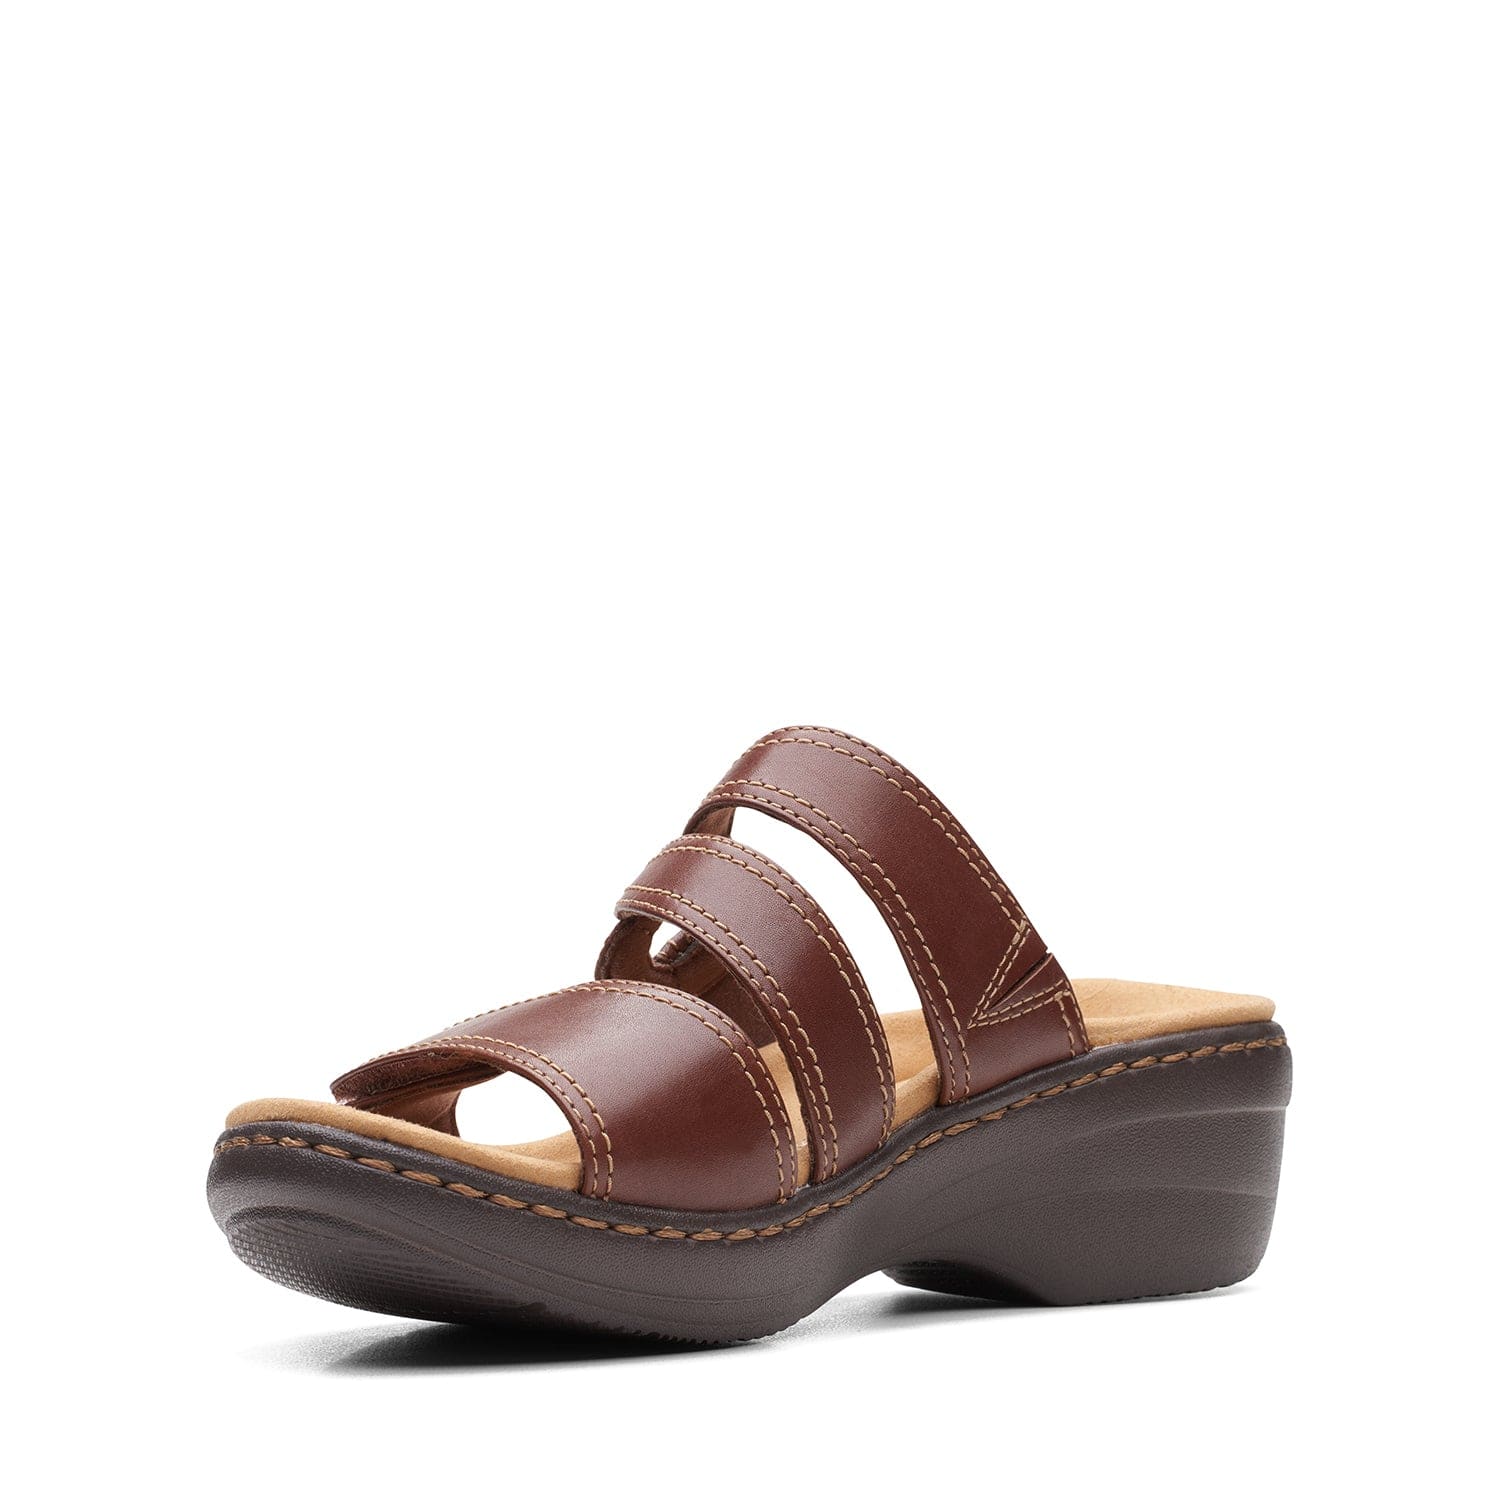 Clarks Merliah Coral Sandals - Dark Tan Leather - 261649624 - D Width (Standard Fit)